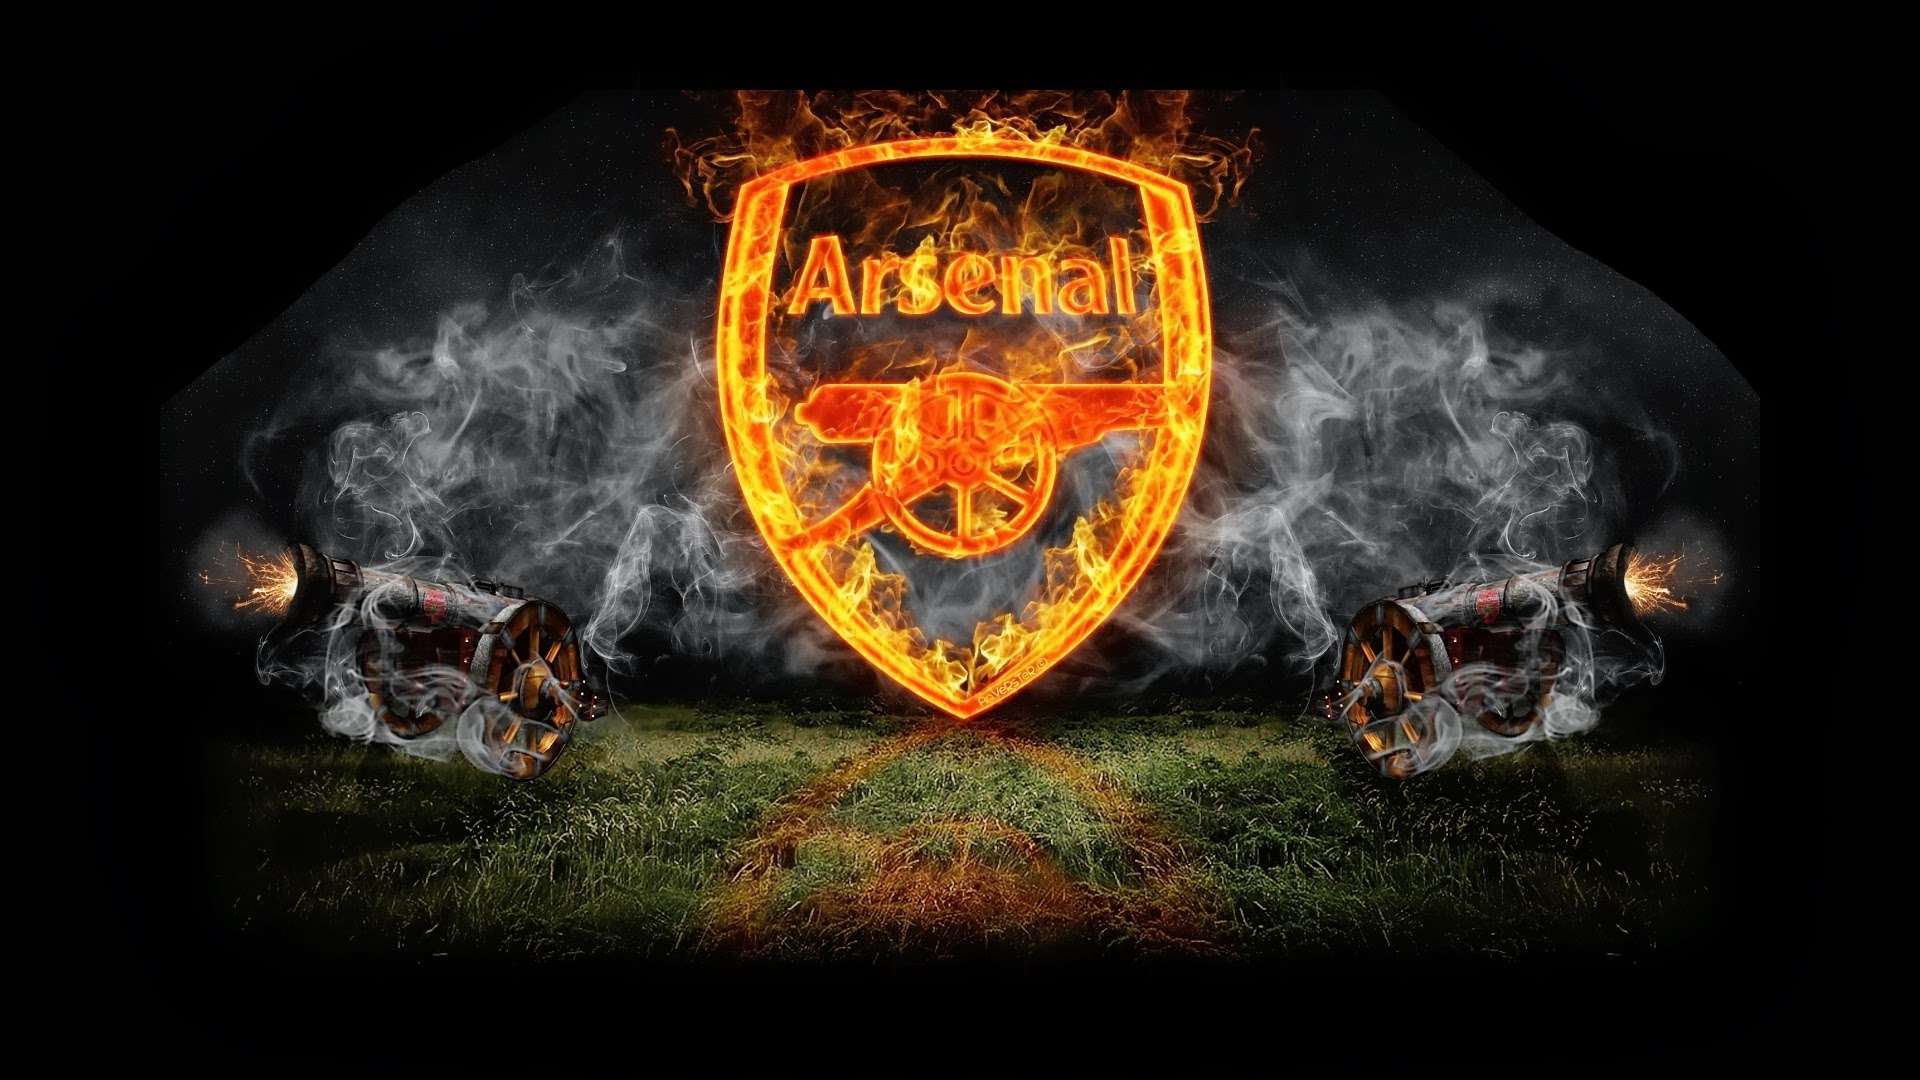 Now Arsenal Logo HD Wallpaper 1080p Read Description